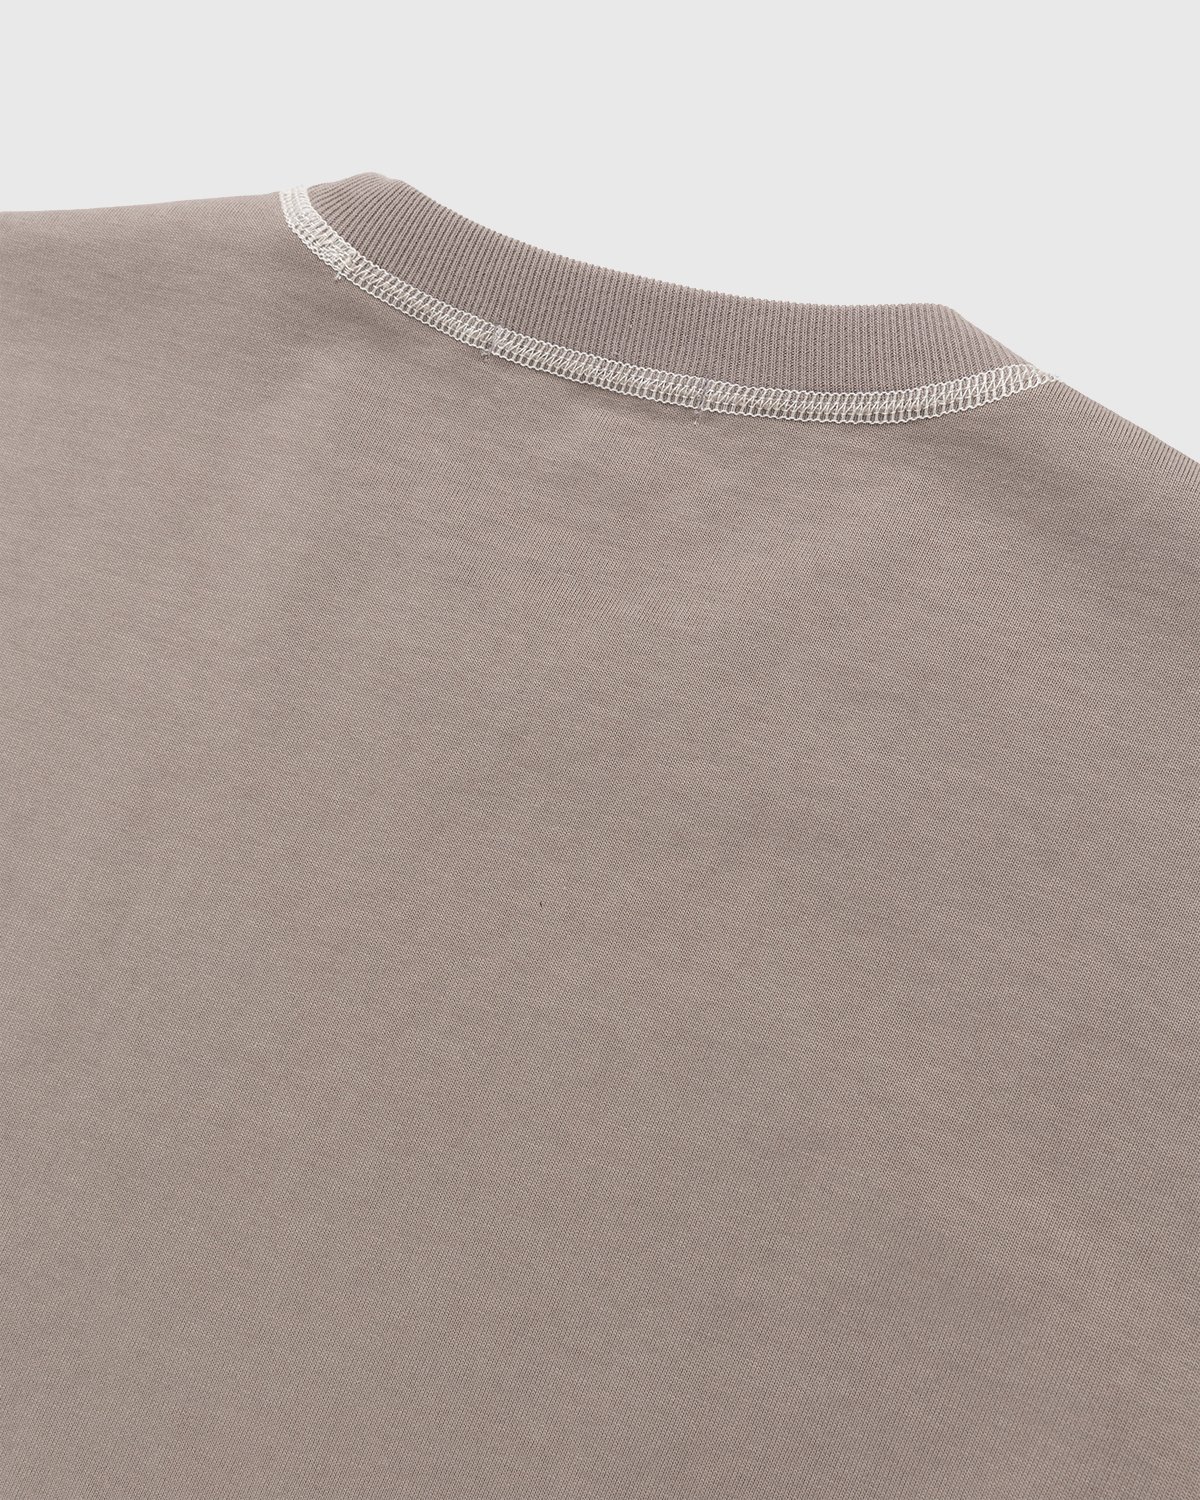 Auralee - Cotton Knit Pocket T-Shirt Grey Beige - Clothing - Beige - Image 4